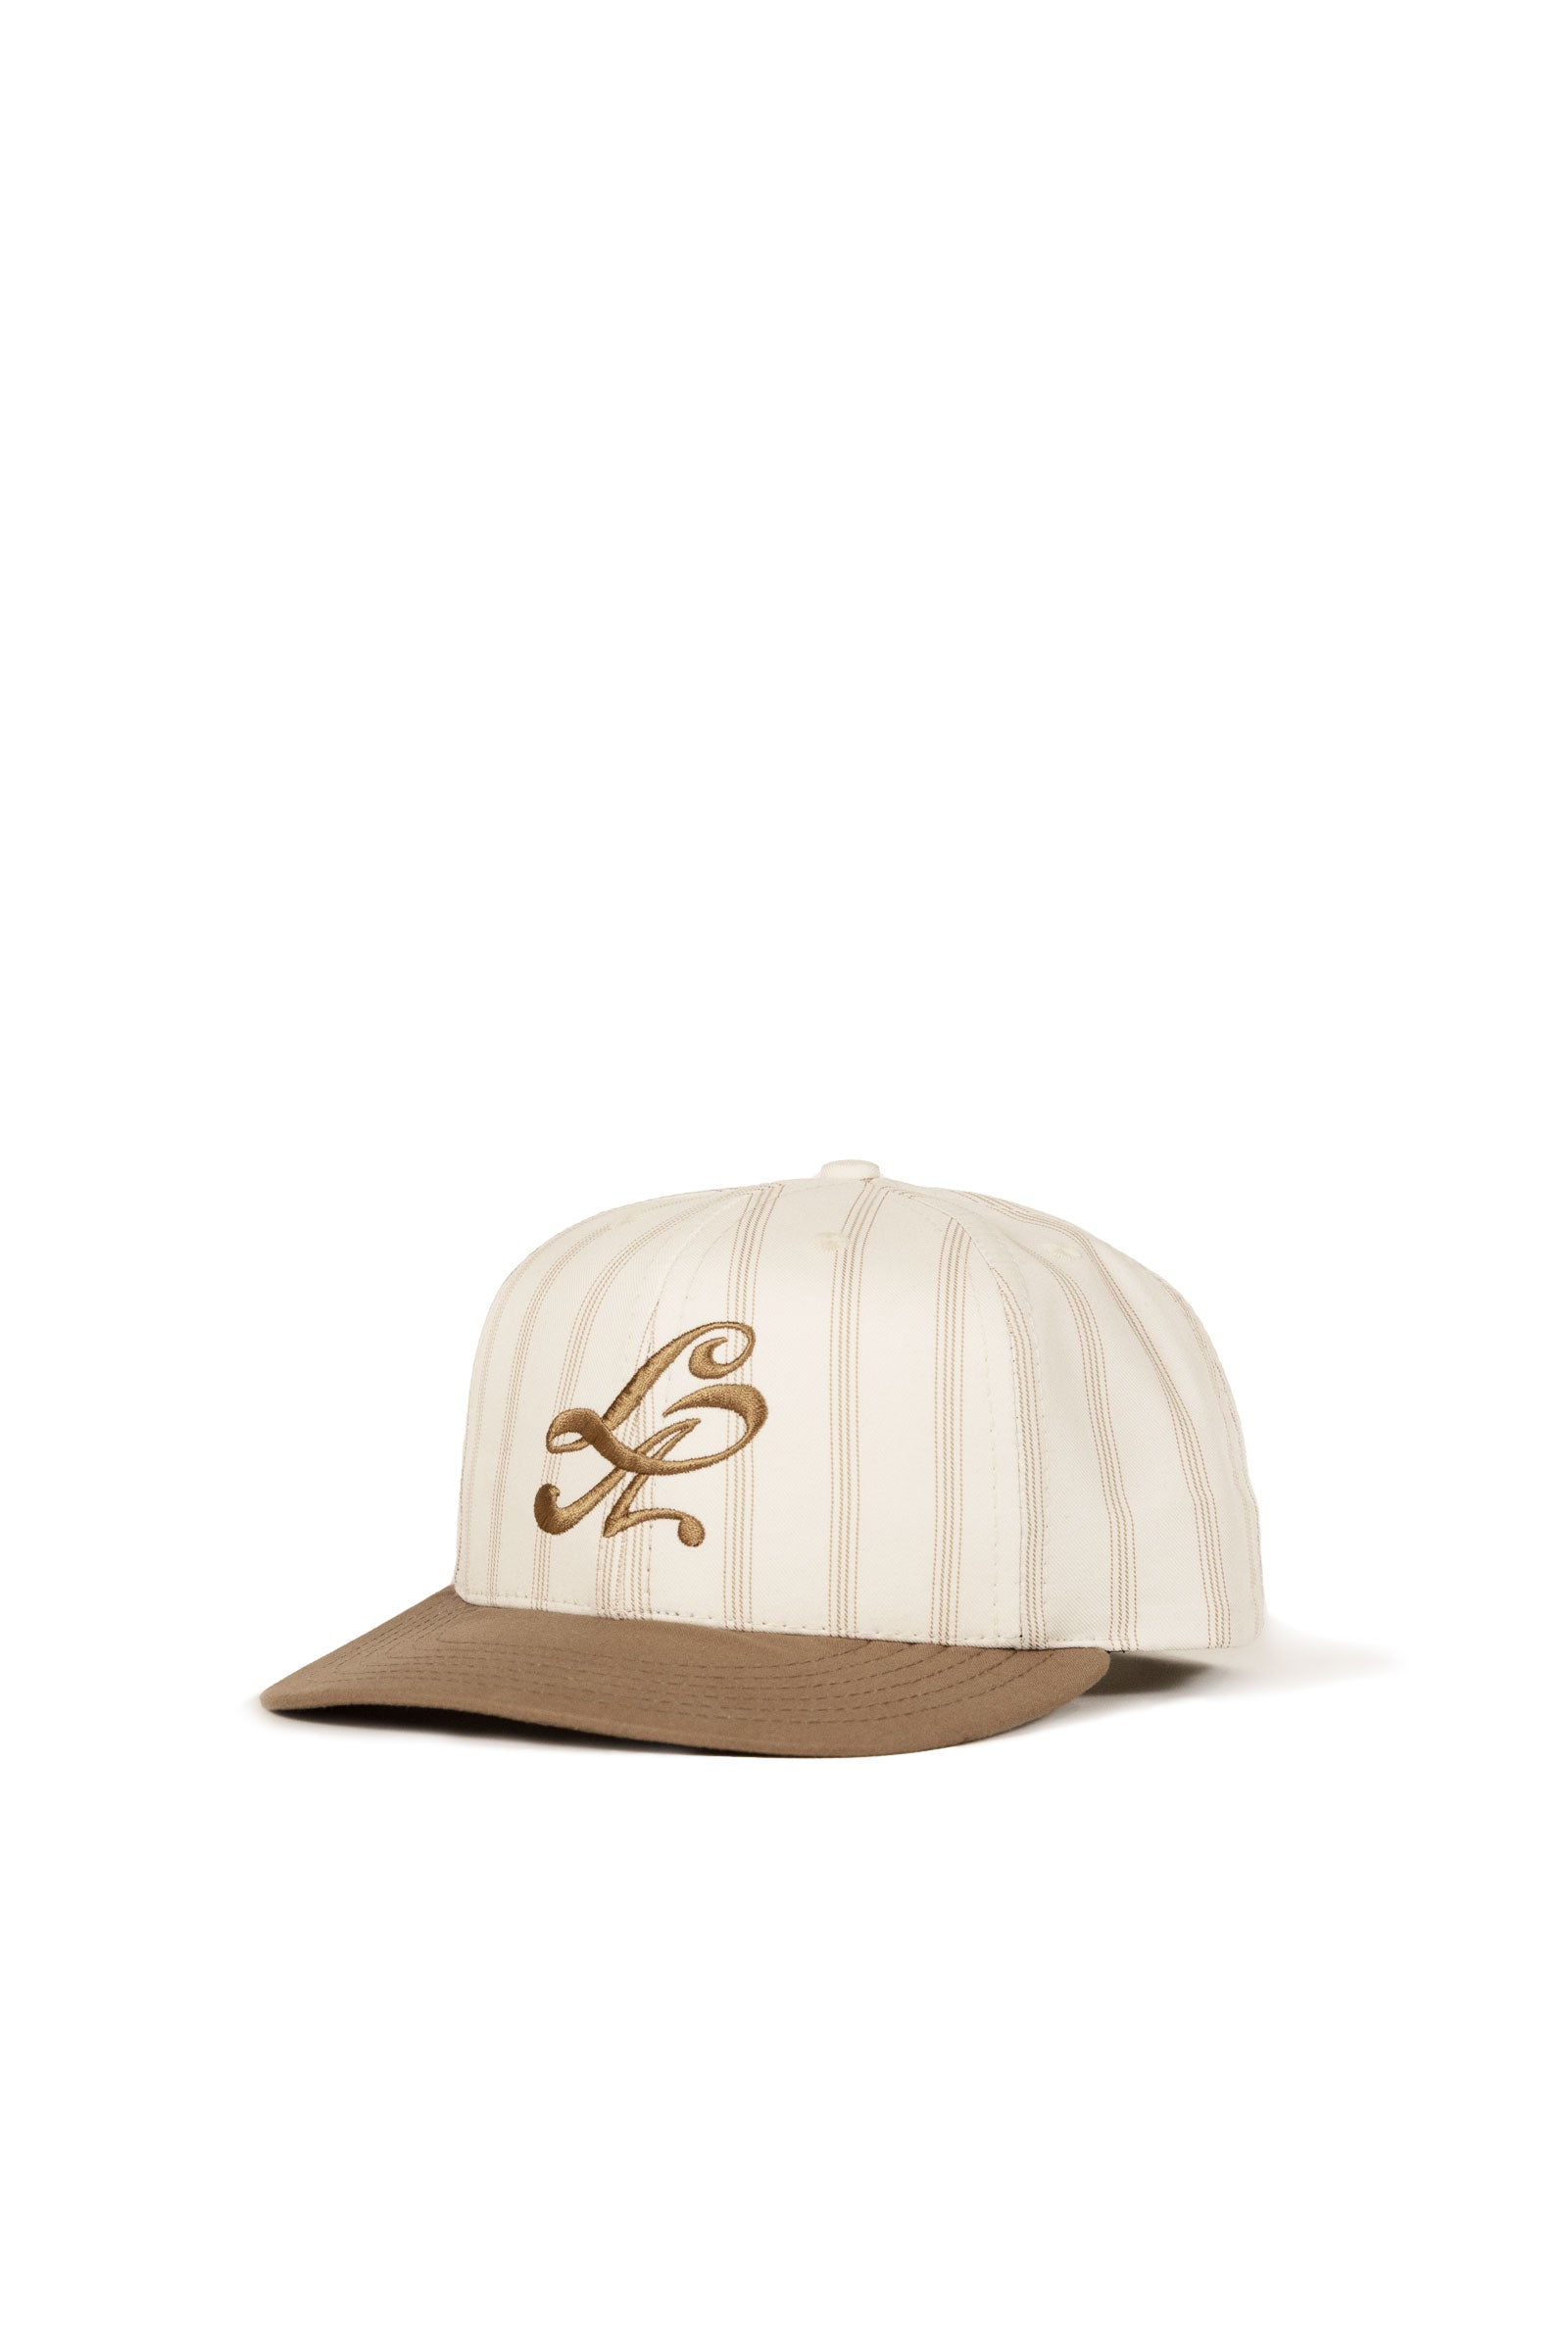 LA Baseball Cap - Creme/Khaki